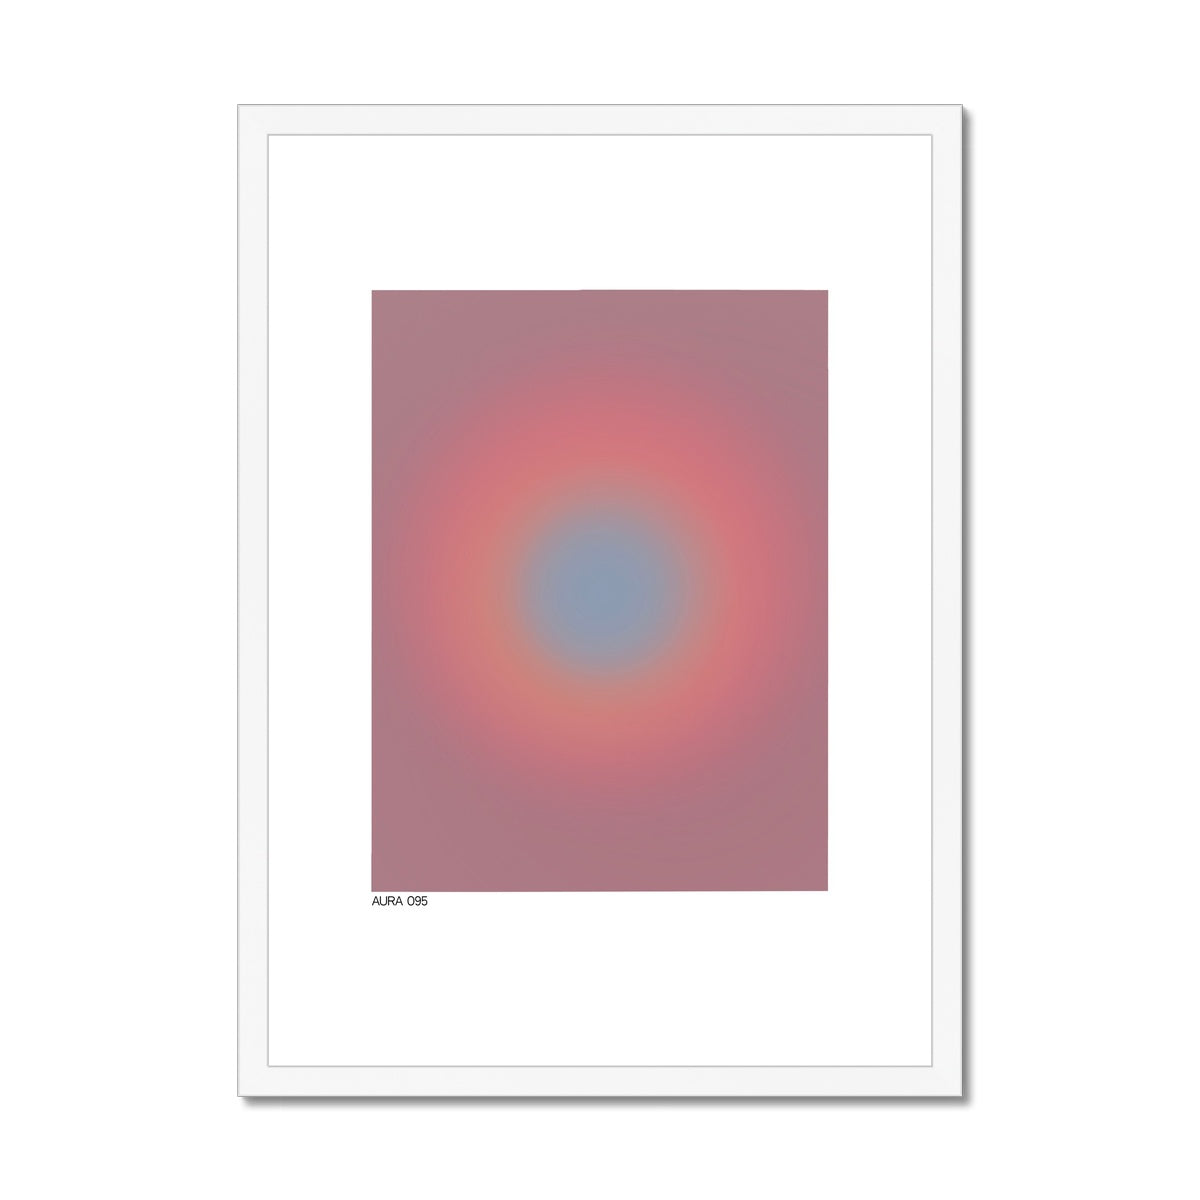 aura 095 Framed & Mounted Print